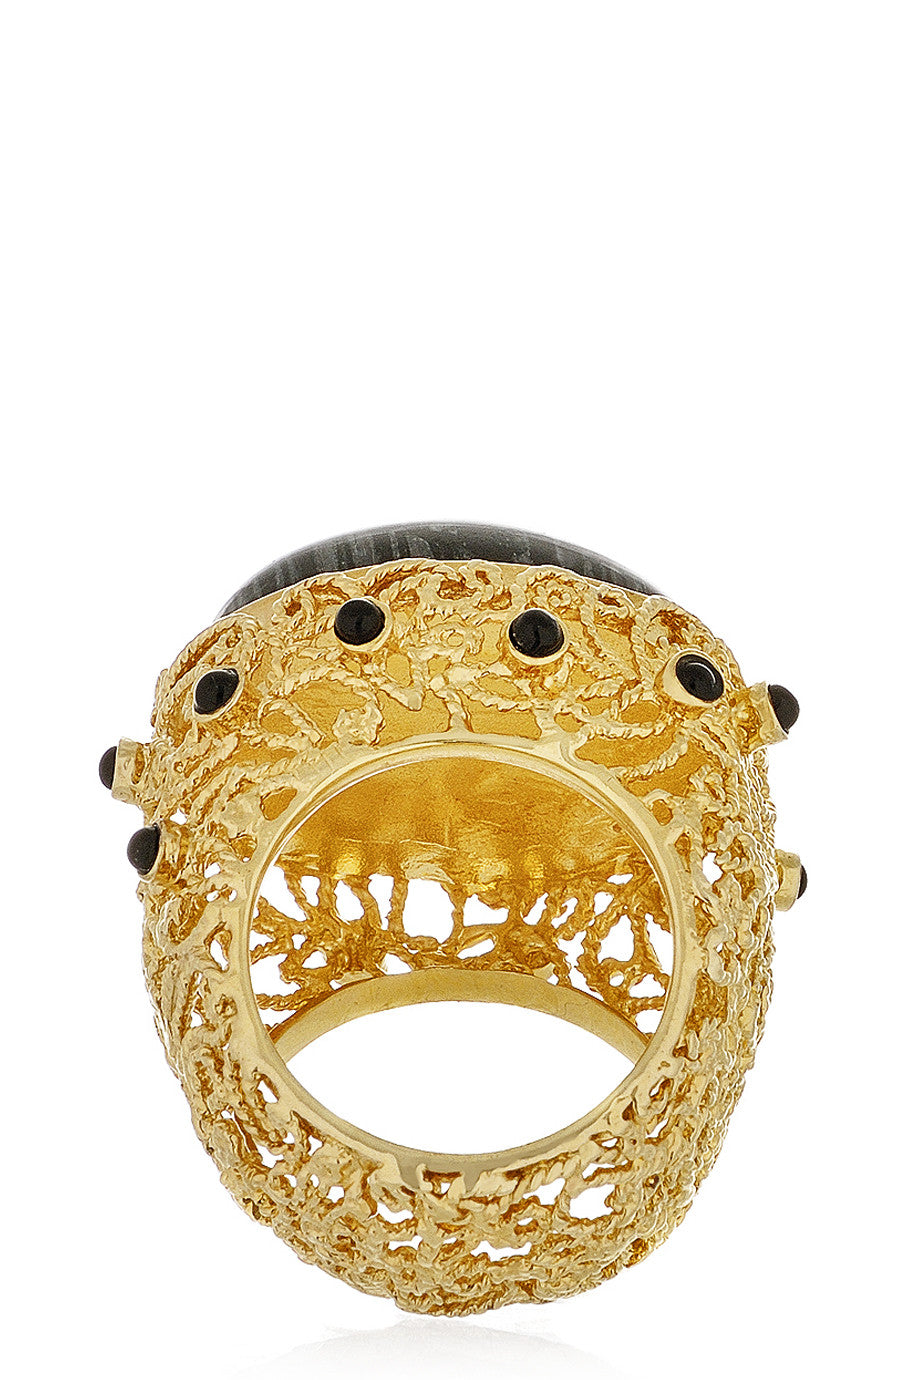 Jasper Δαχτυλίδι με Ορυκτή Πέτρα Ιάσπι | Κοσμήματα Δαχτυλίδια | Jasper Ring with Jasper Mineral Stone